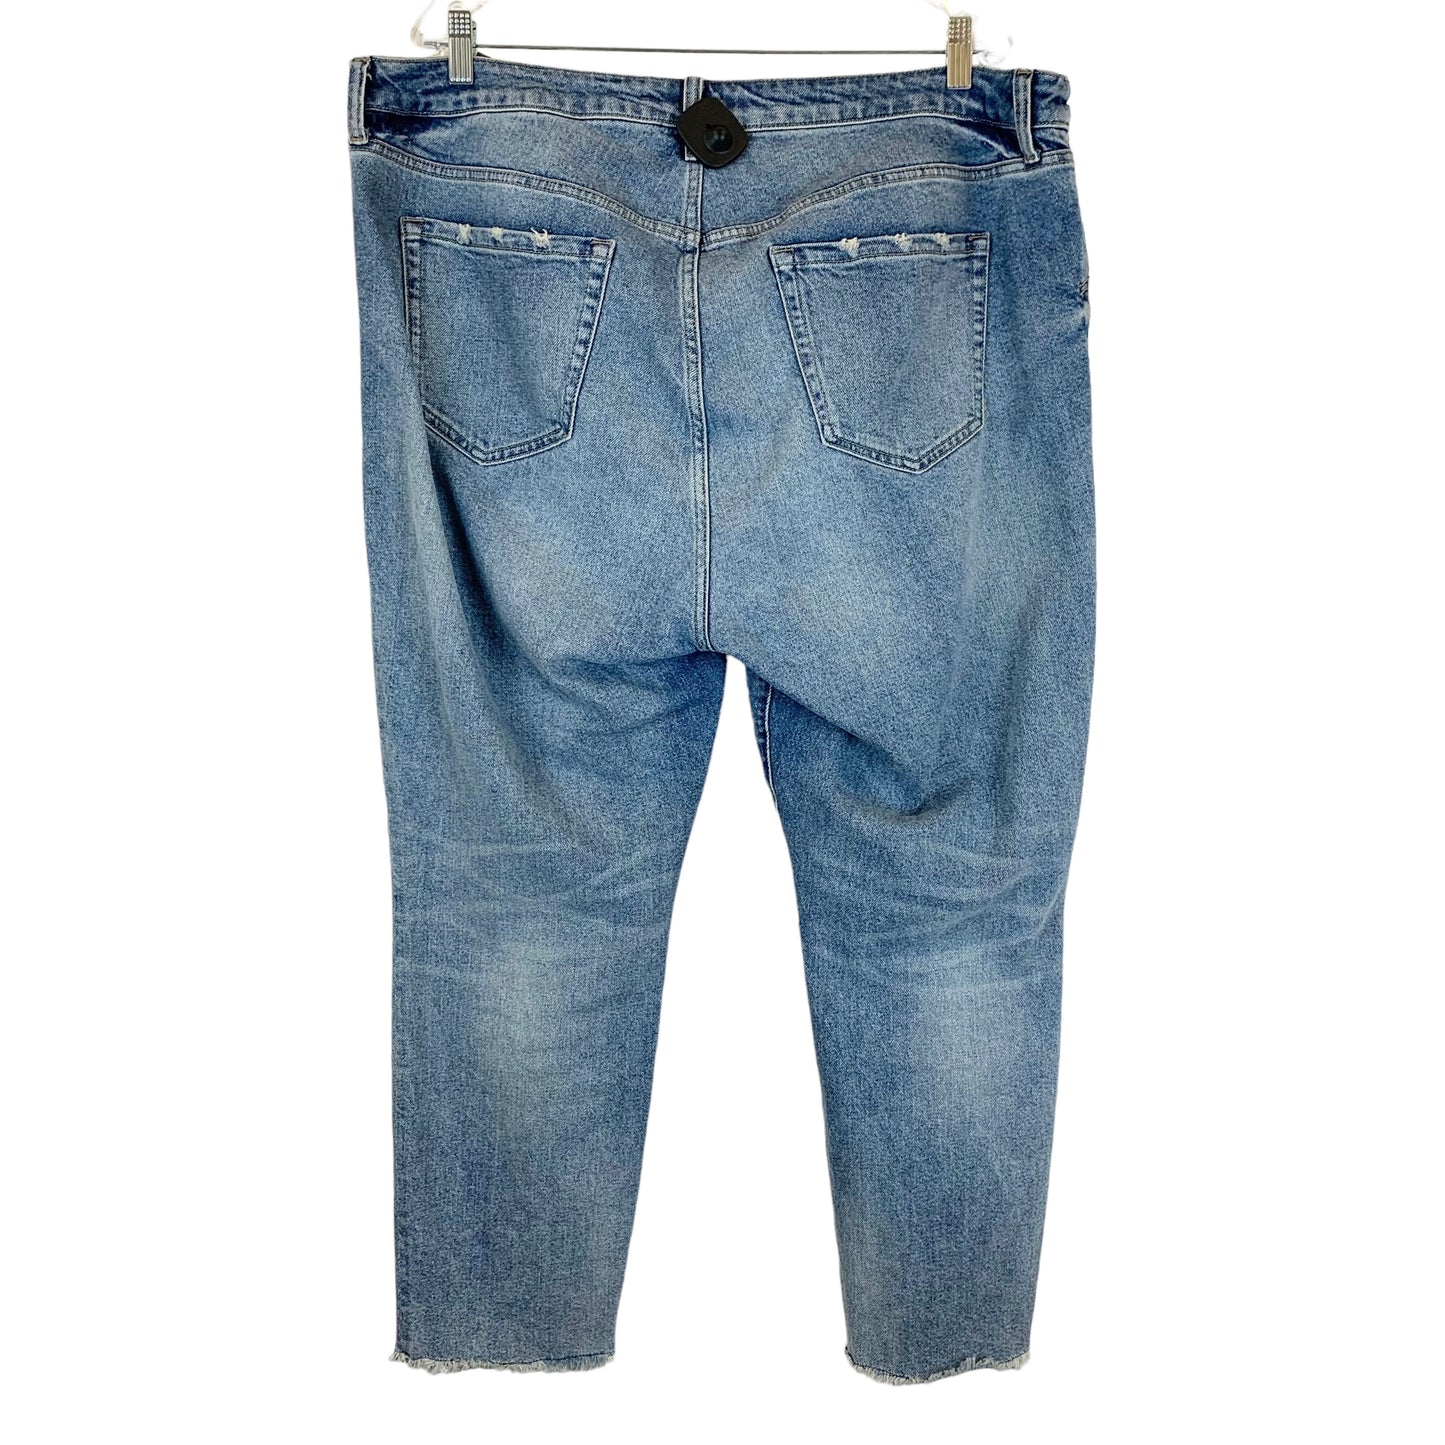 Jeans Skinny By Torrid  Size: 18R